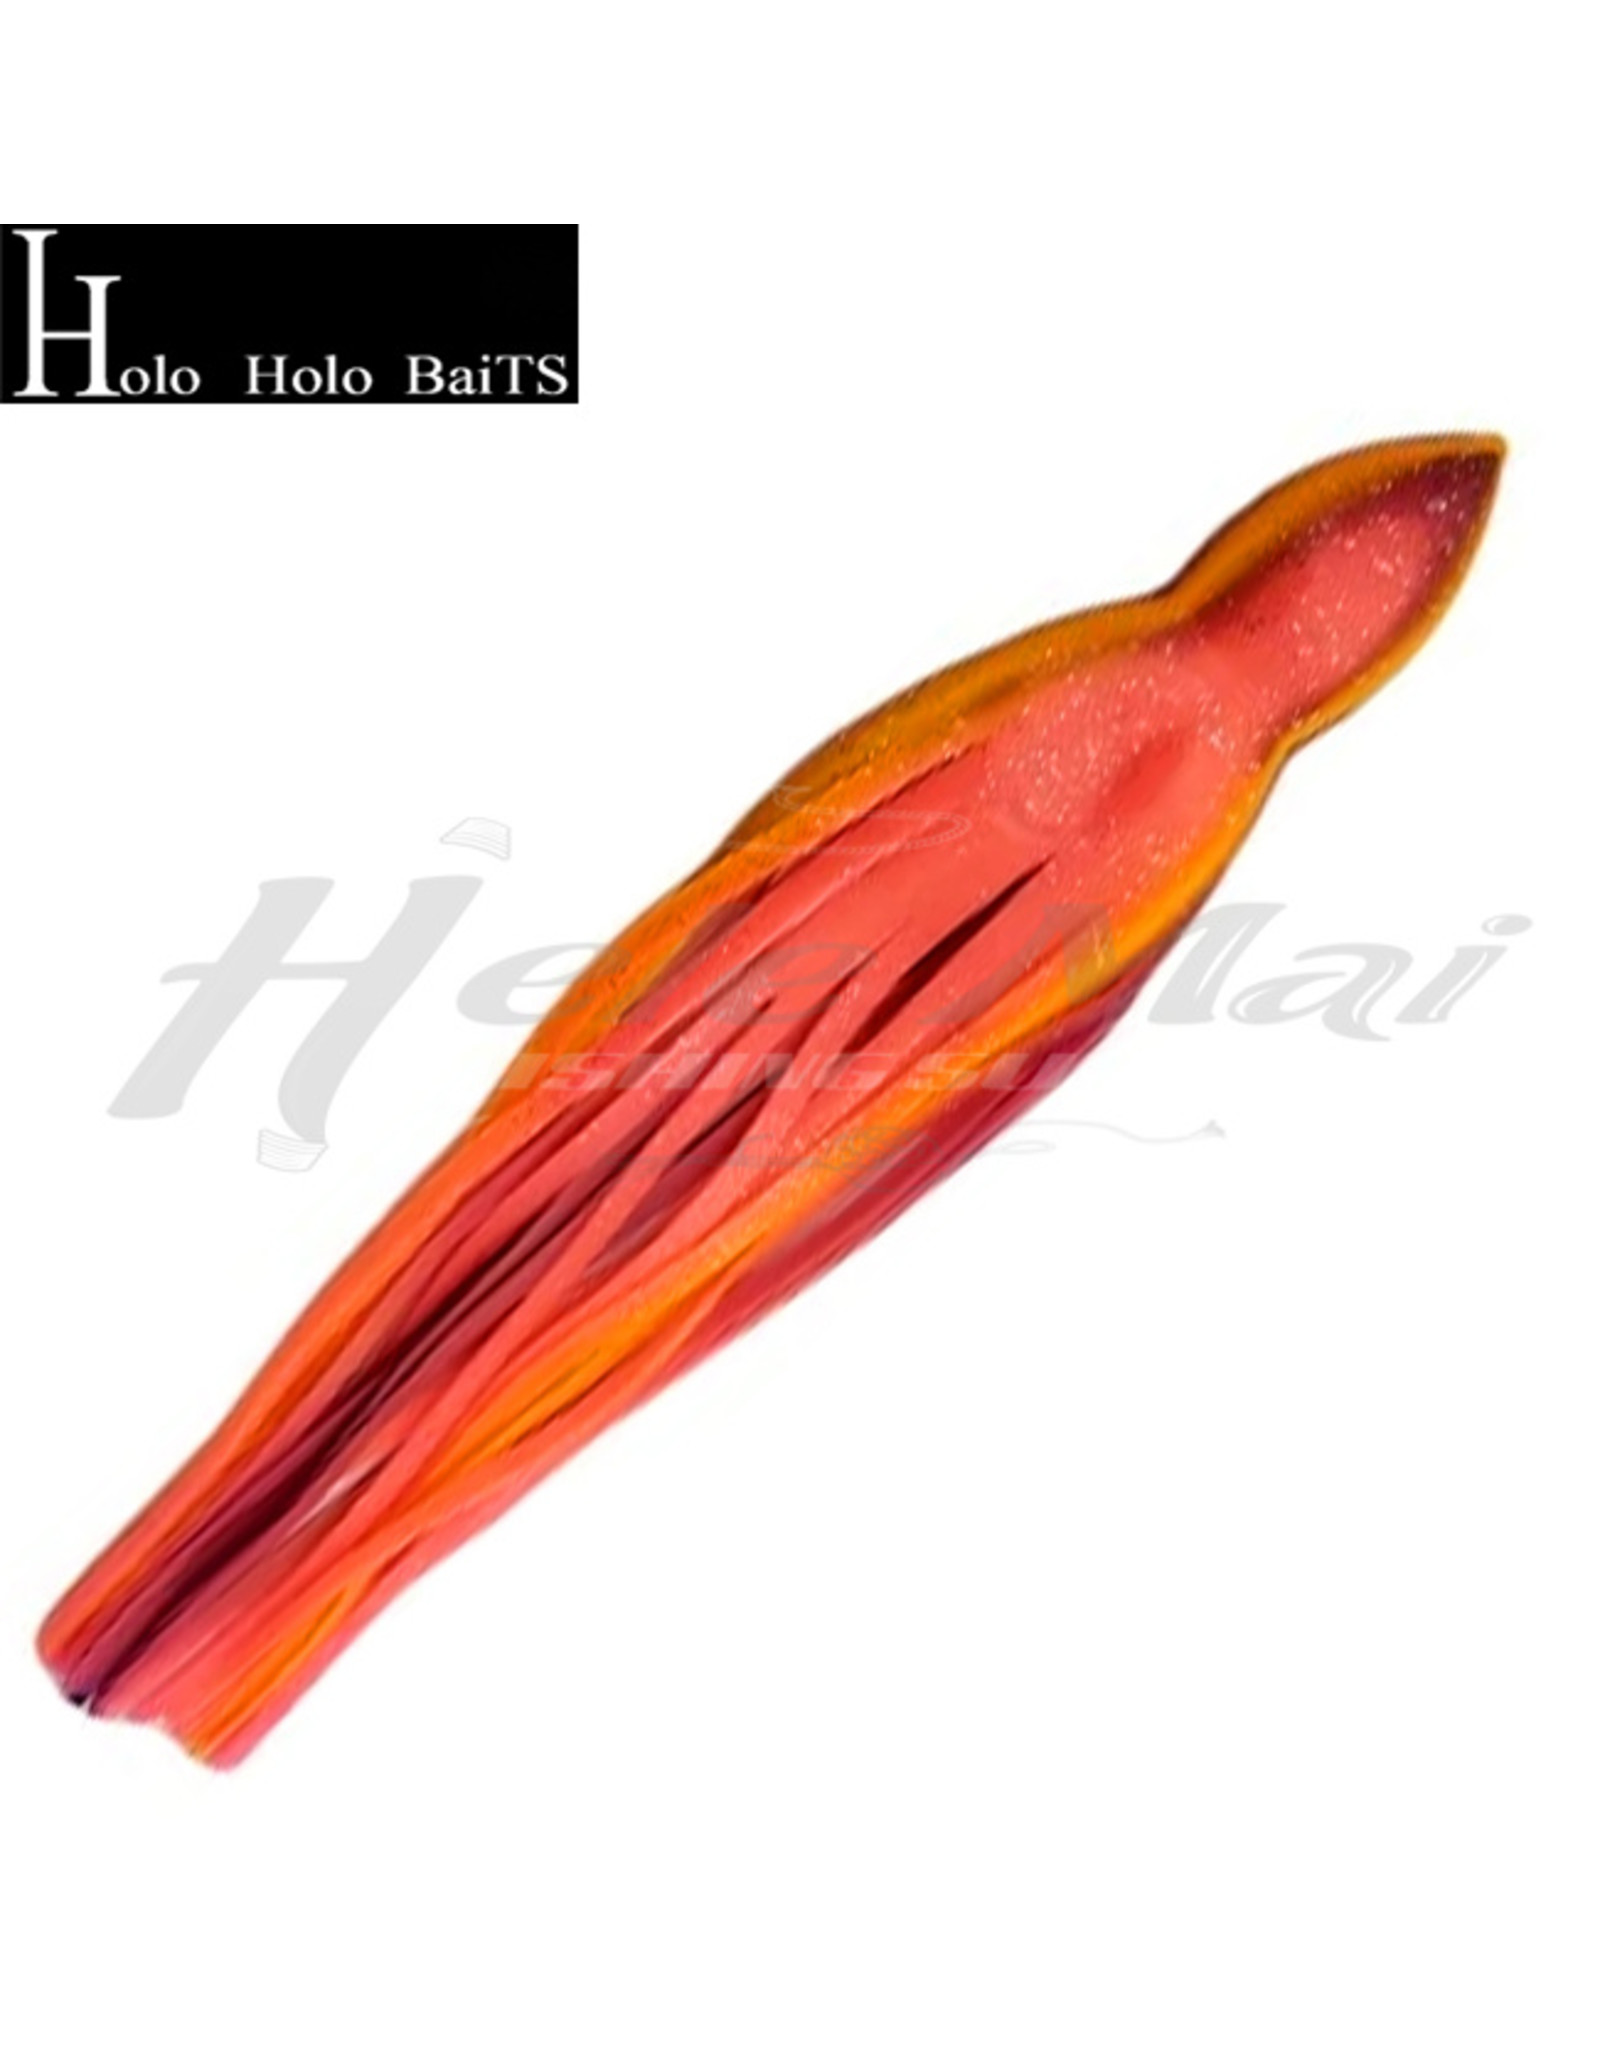 HOLO HOLO HAWAII (HHH) HH, 9" SQUID SKIRT SALMON ORANGE RED 0084